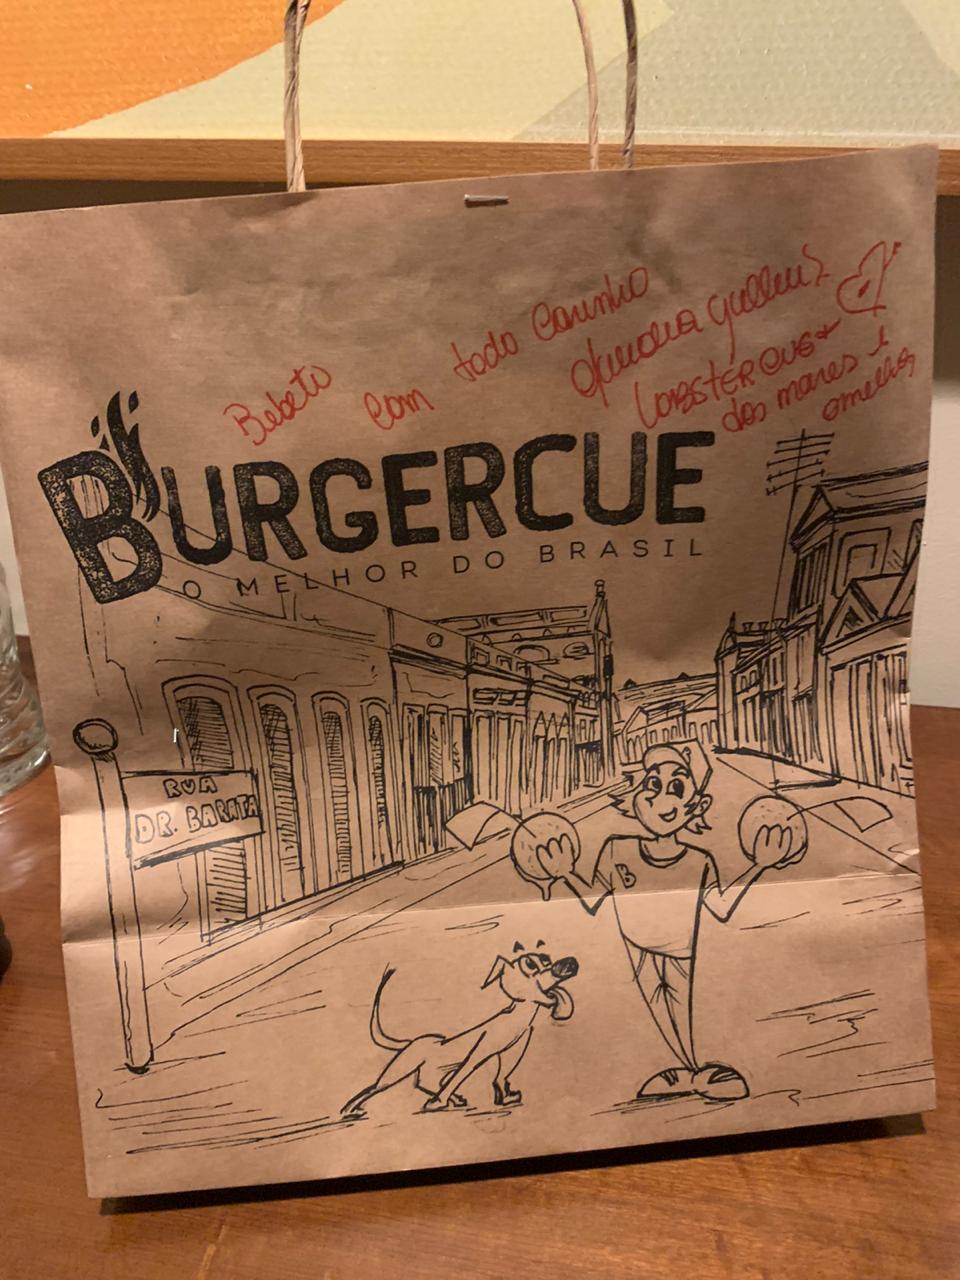 A sacola da BugerCue, um a bossa extra, que conta as curiosidades de Natal na Segunda Guerra Mundial, a primeira cidade do Brasil a comer Burger e tomar coca-cola